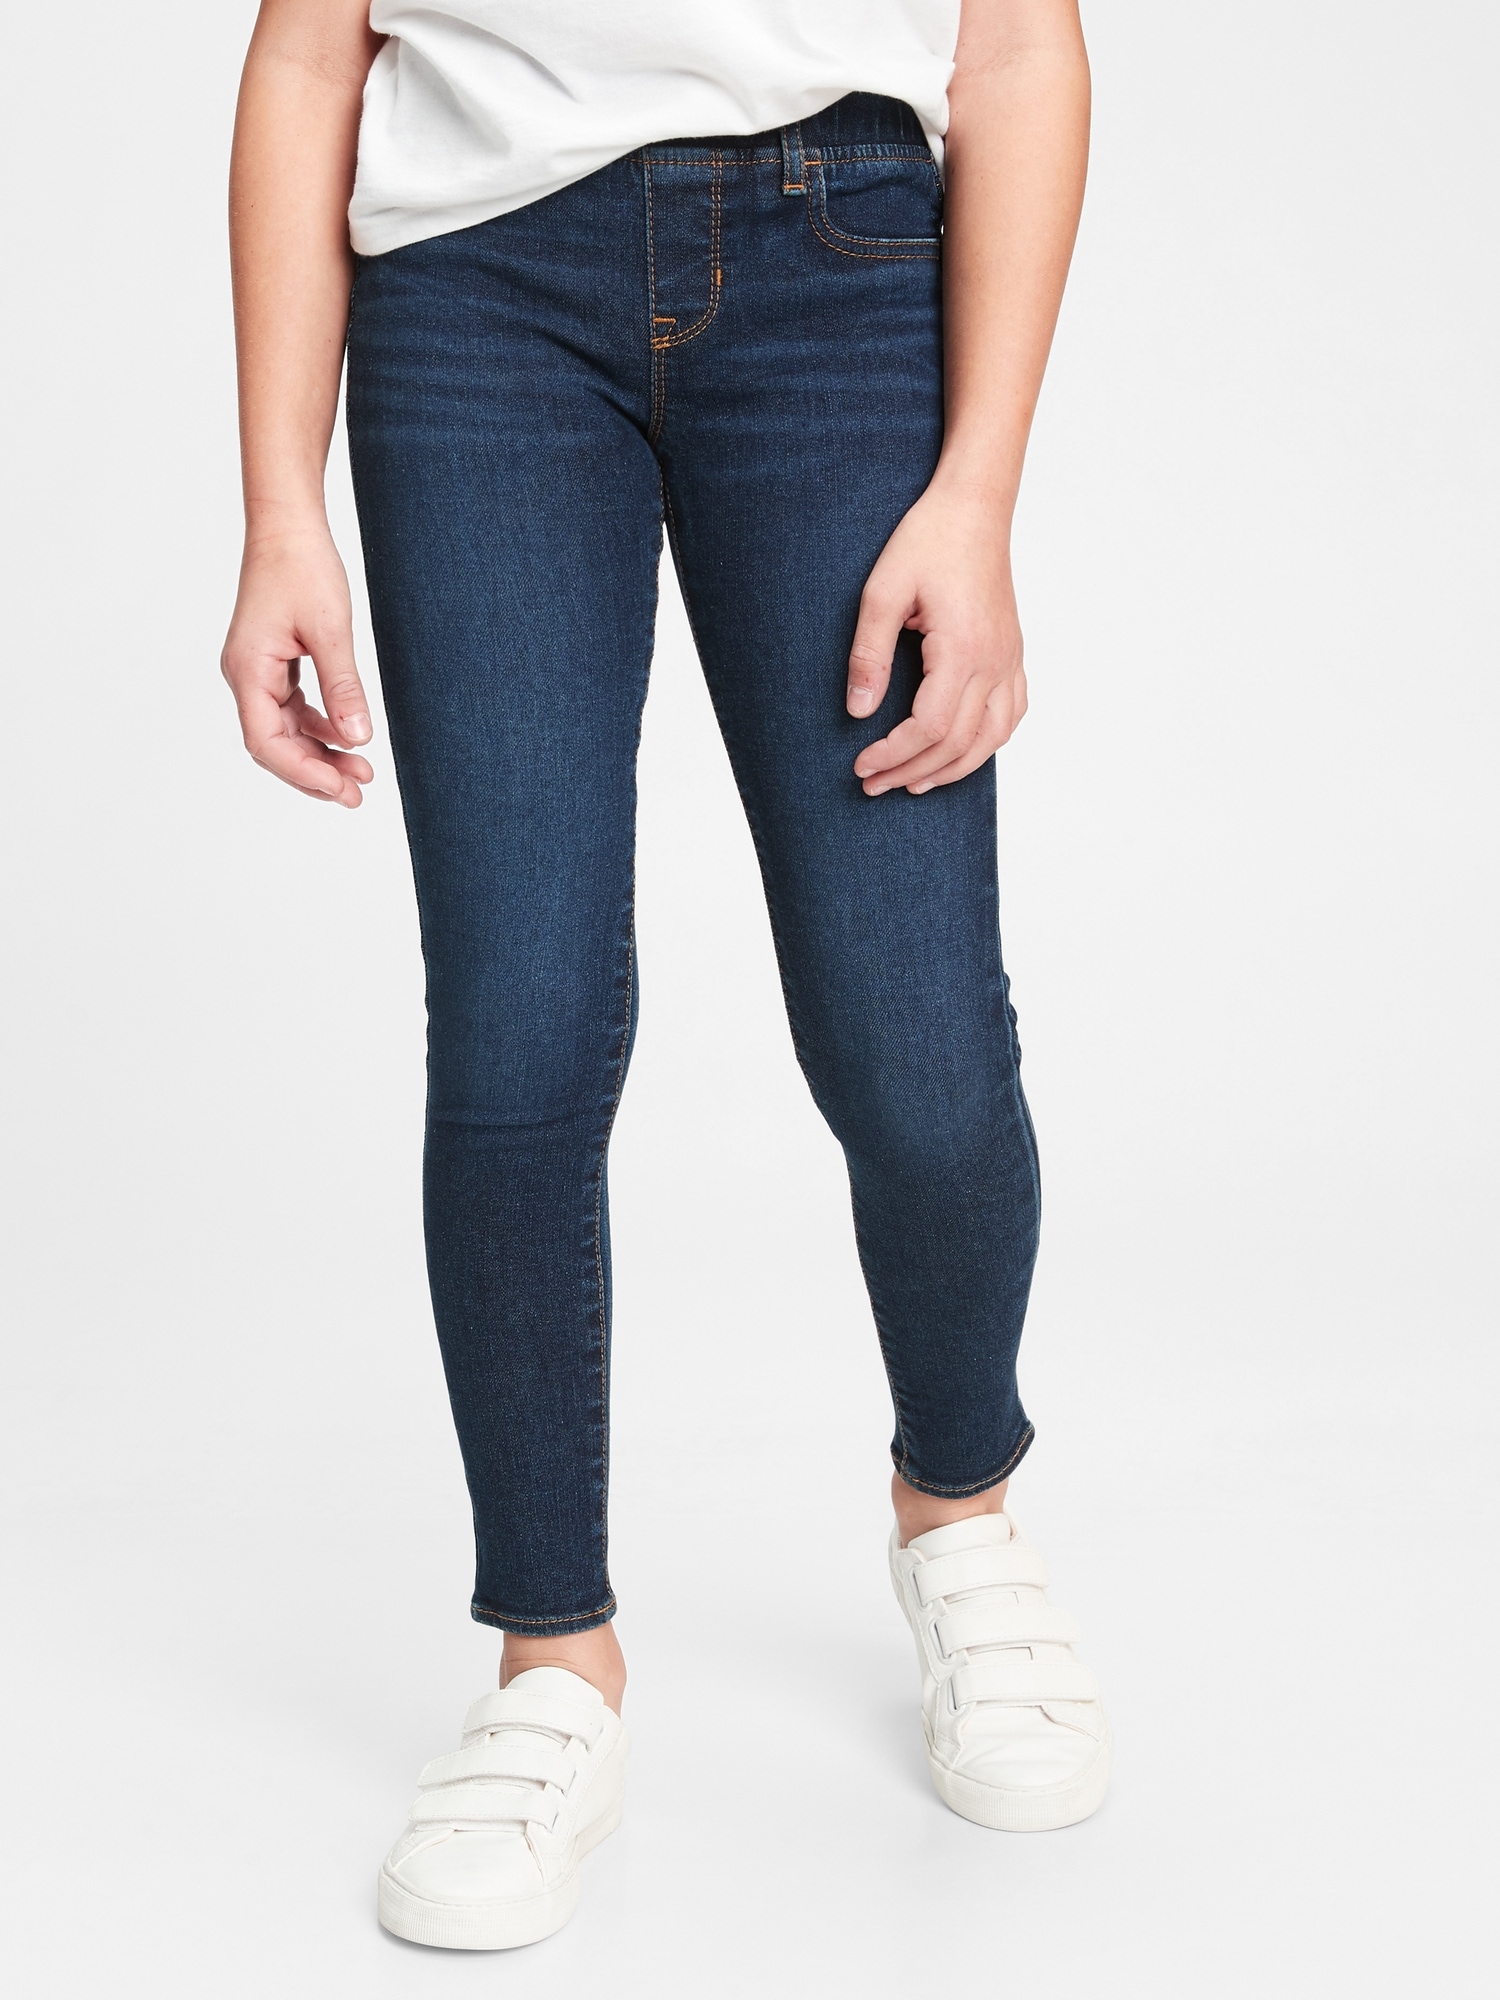 GAP, Jeans, Host Pick Gap Denim Jeggings Size 427 Regular